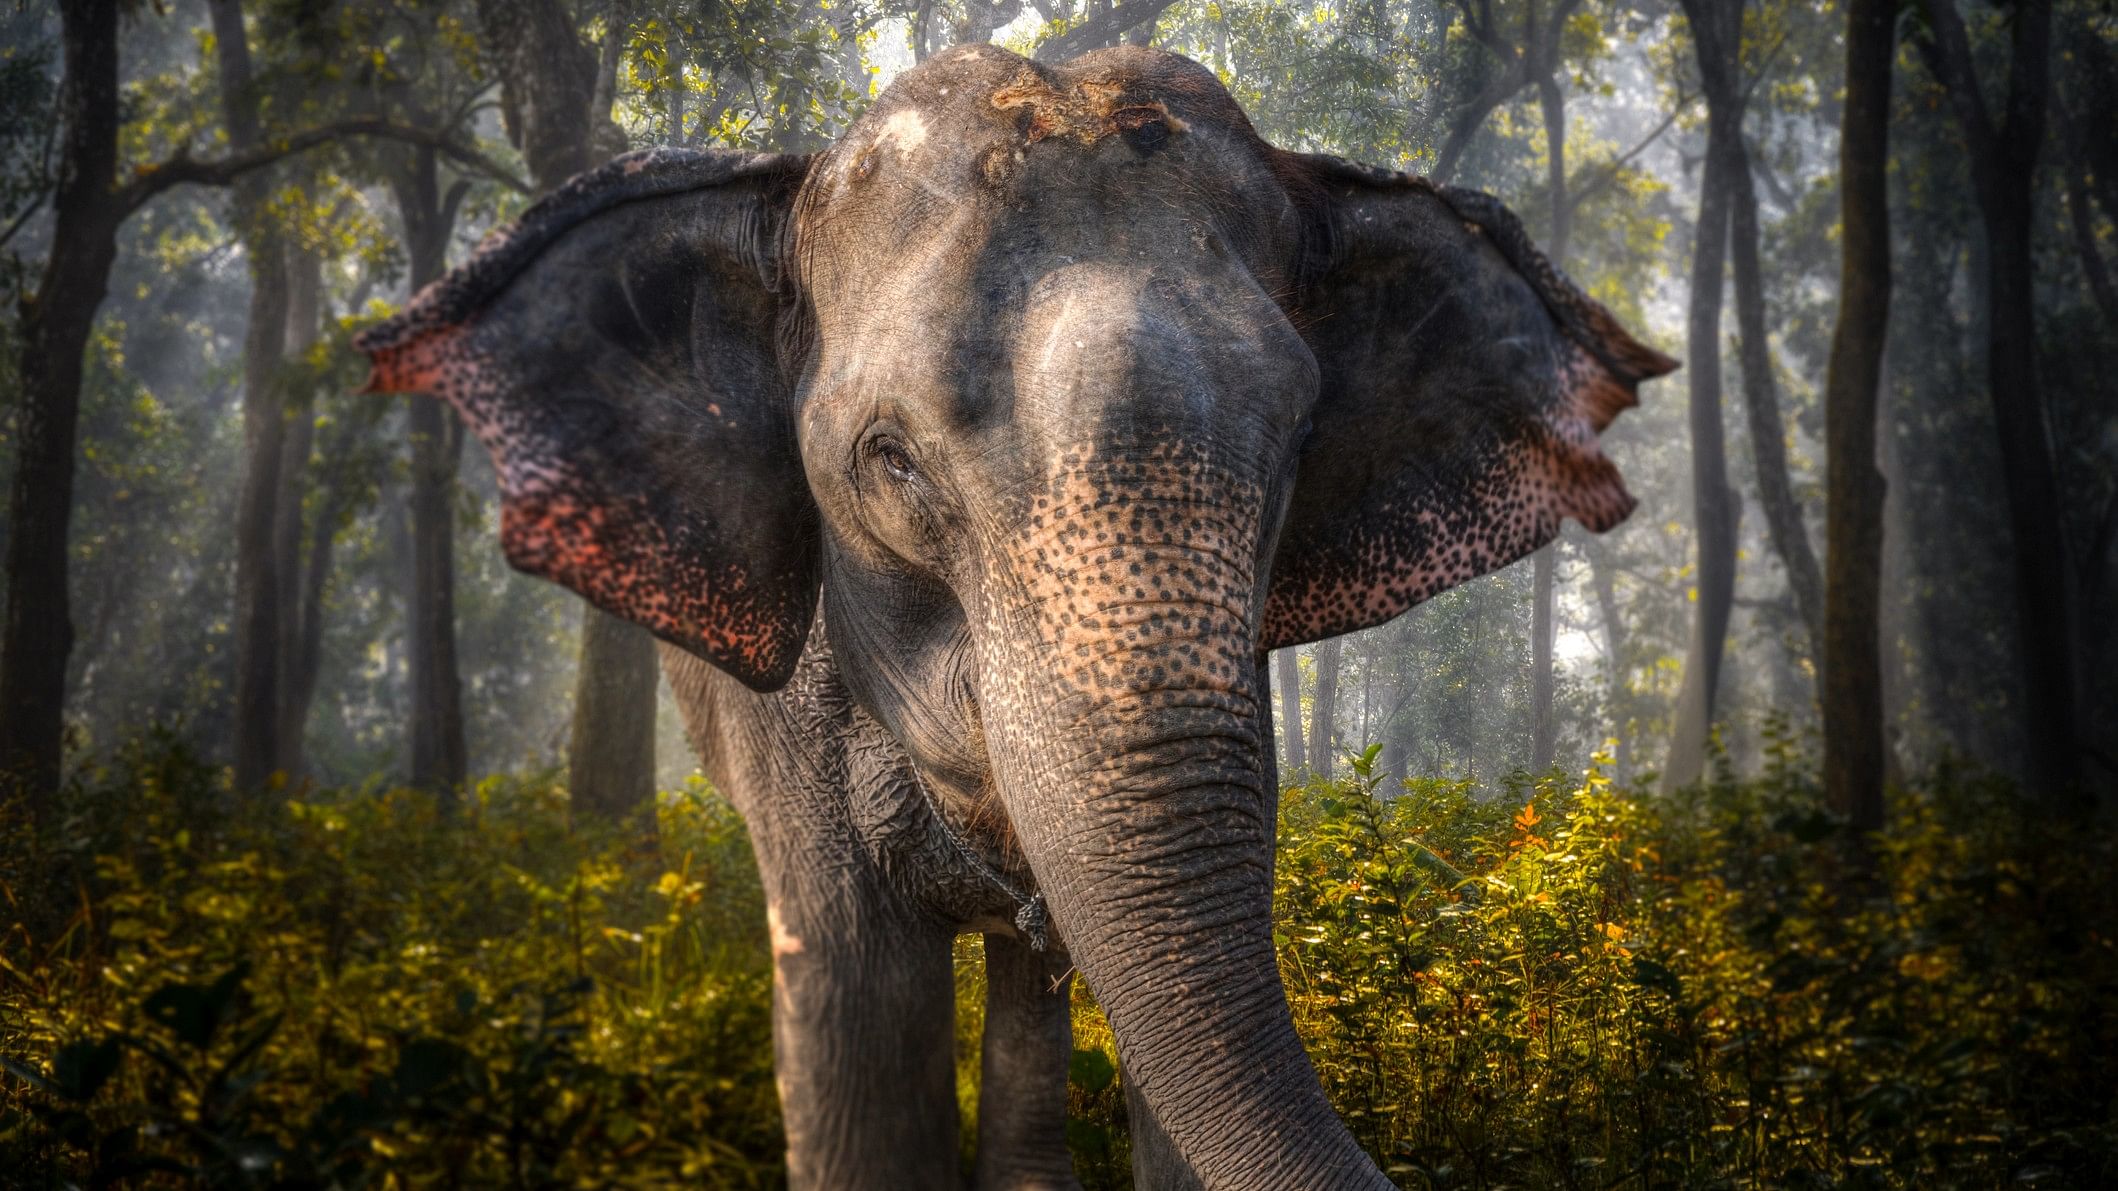 <div class="paragraphs"><p>Representative image showing an elephant in a jungle.</p></div>